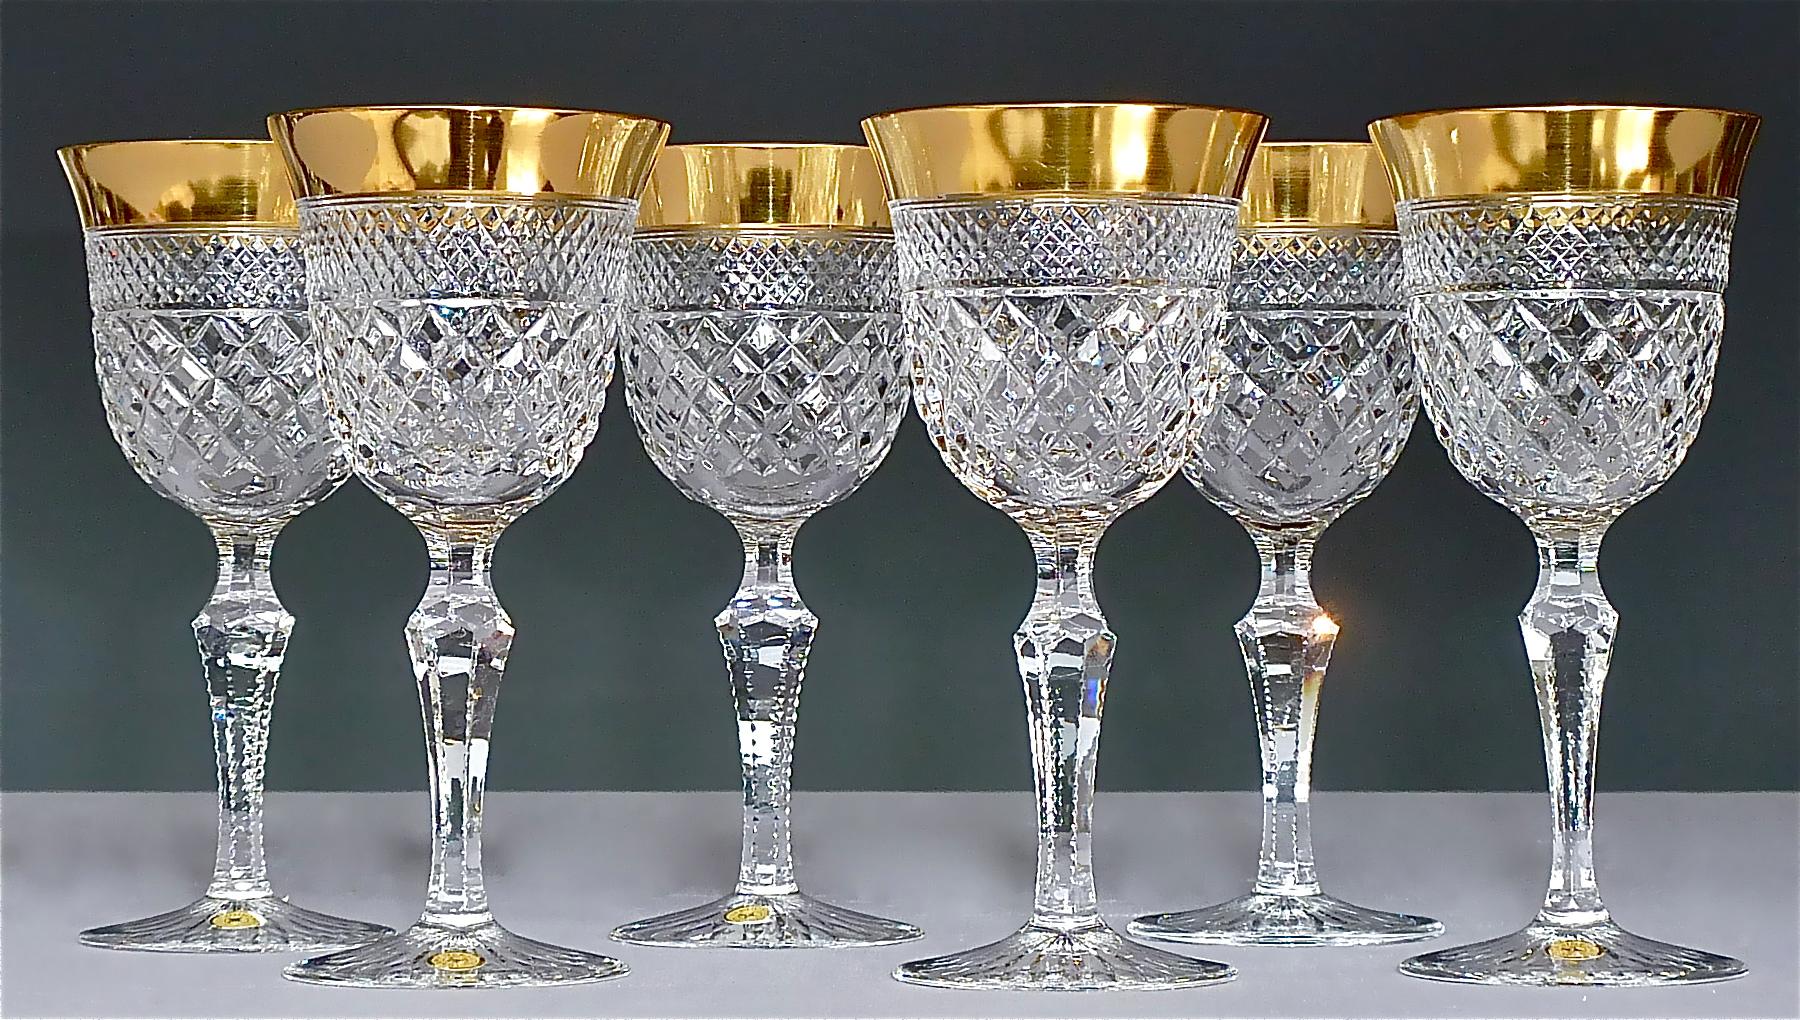 gold wine glasses set of 6